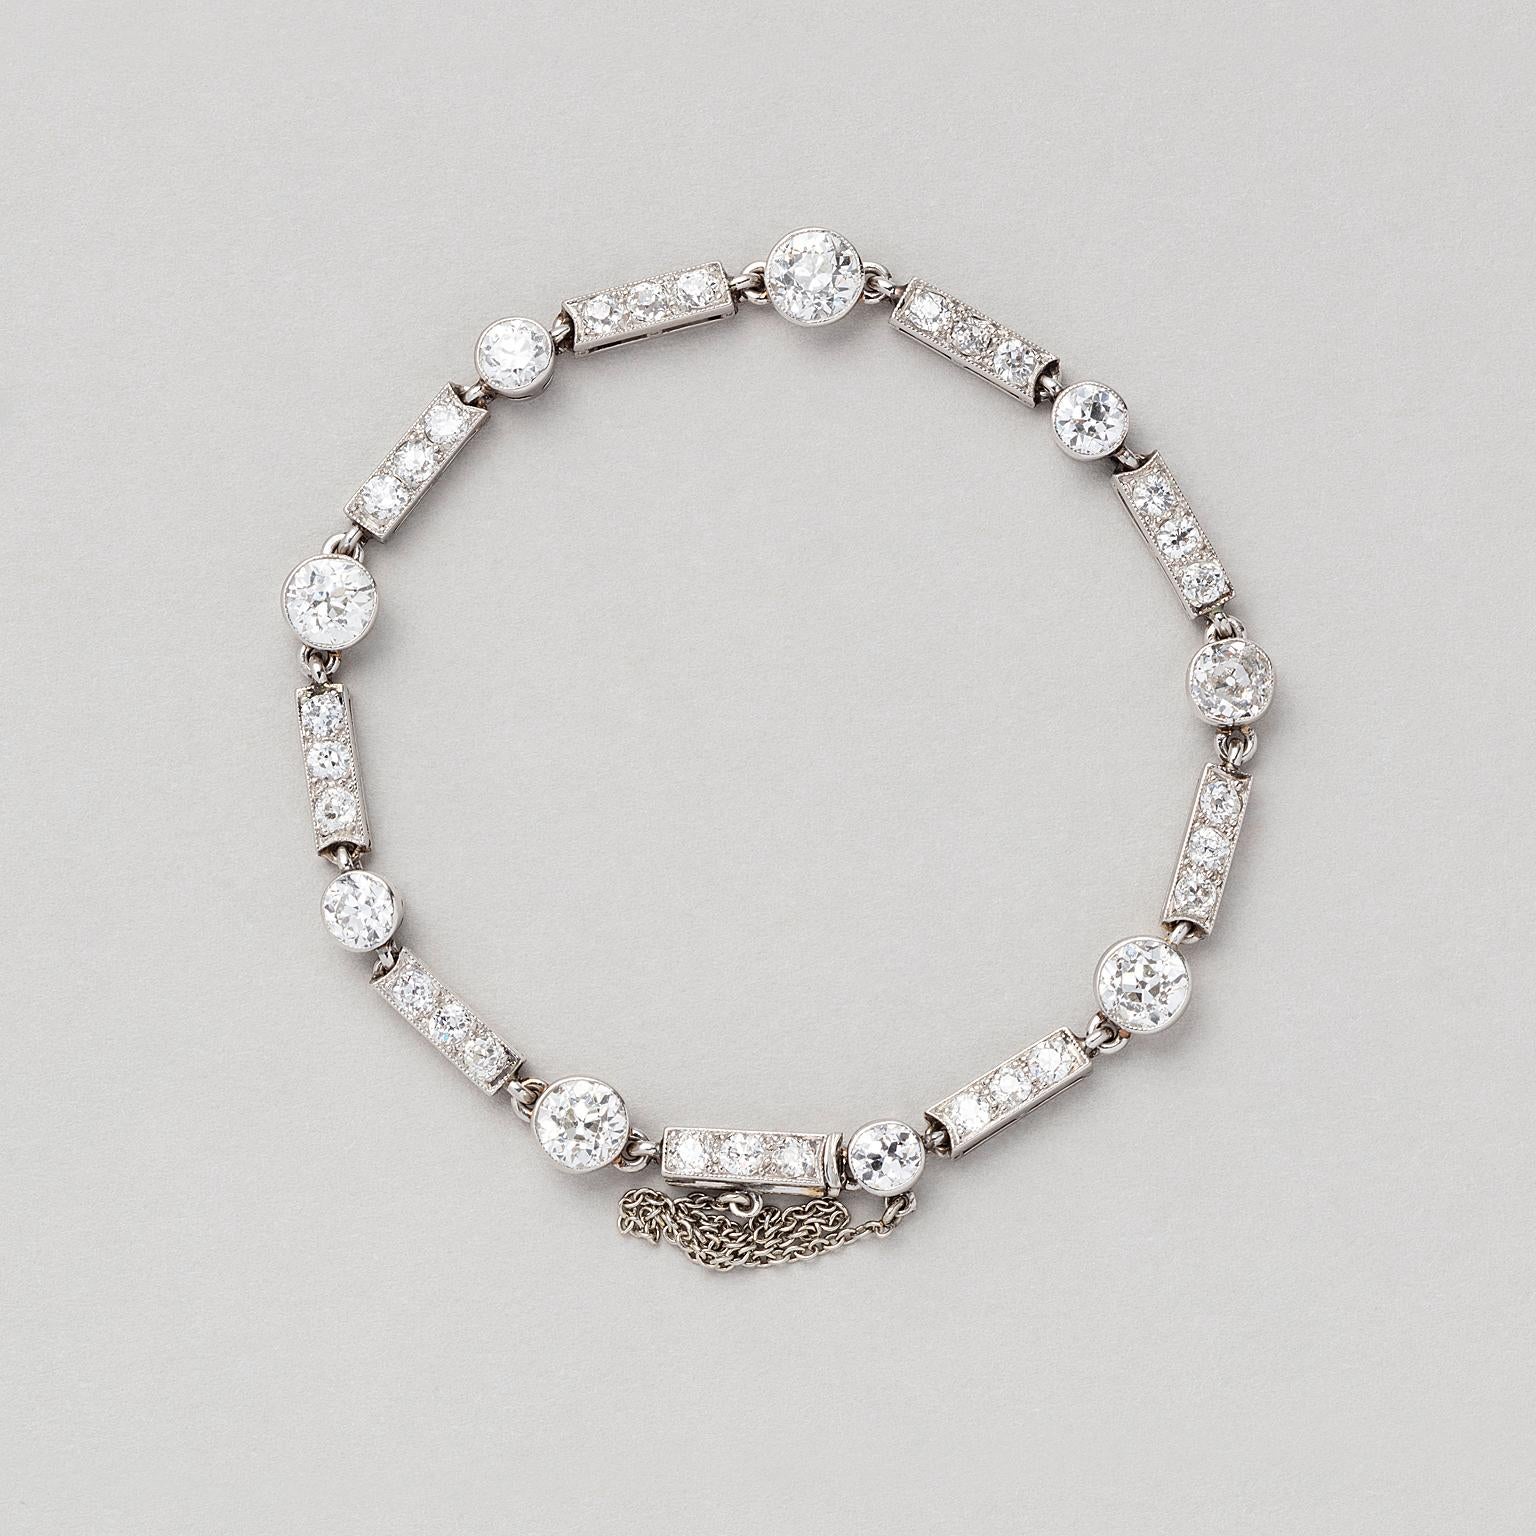 A platinum Art Deco bracelet with single bezel set old cut diamonds alternated with barettes set with old cut diamonds circa 6 carat in total, H - Si), France circa 1930.

weight: 14.51 grams
length: 17.5-18 cm

